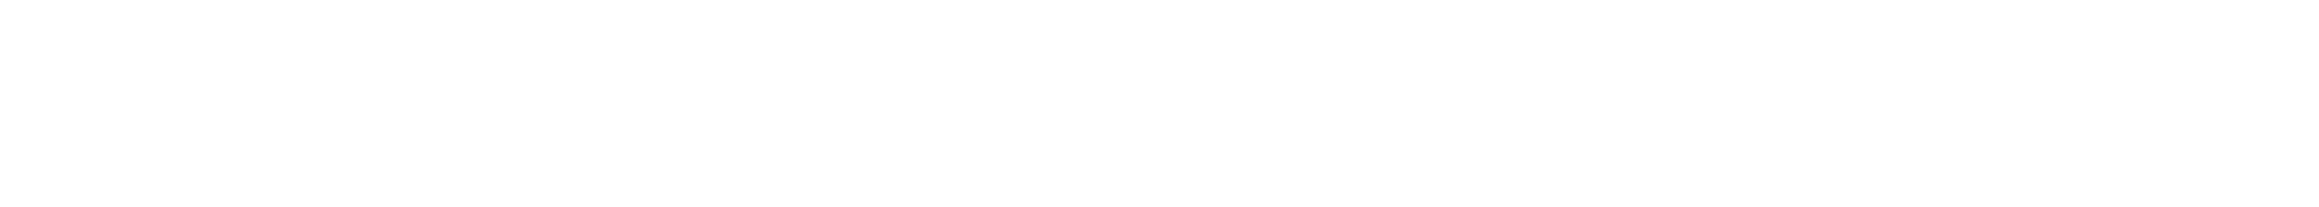 Department of Infrastructure, Transport, Regional Development and Communications print logo